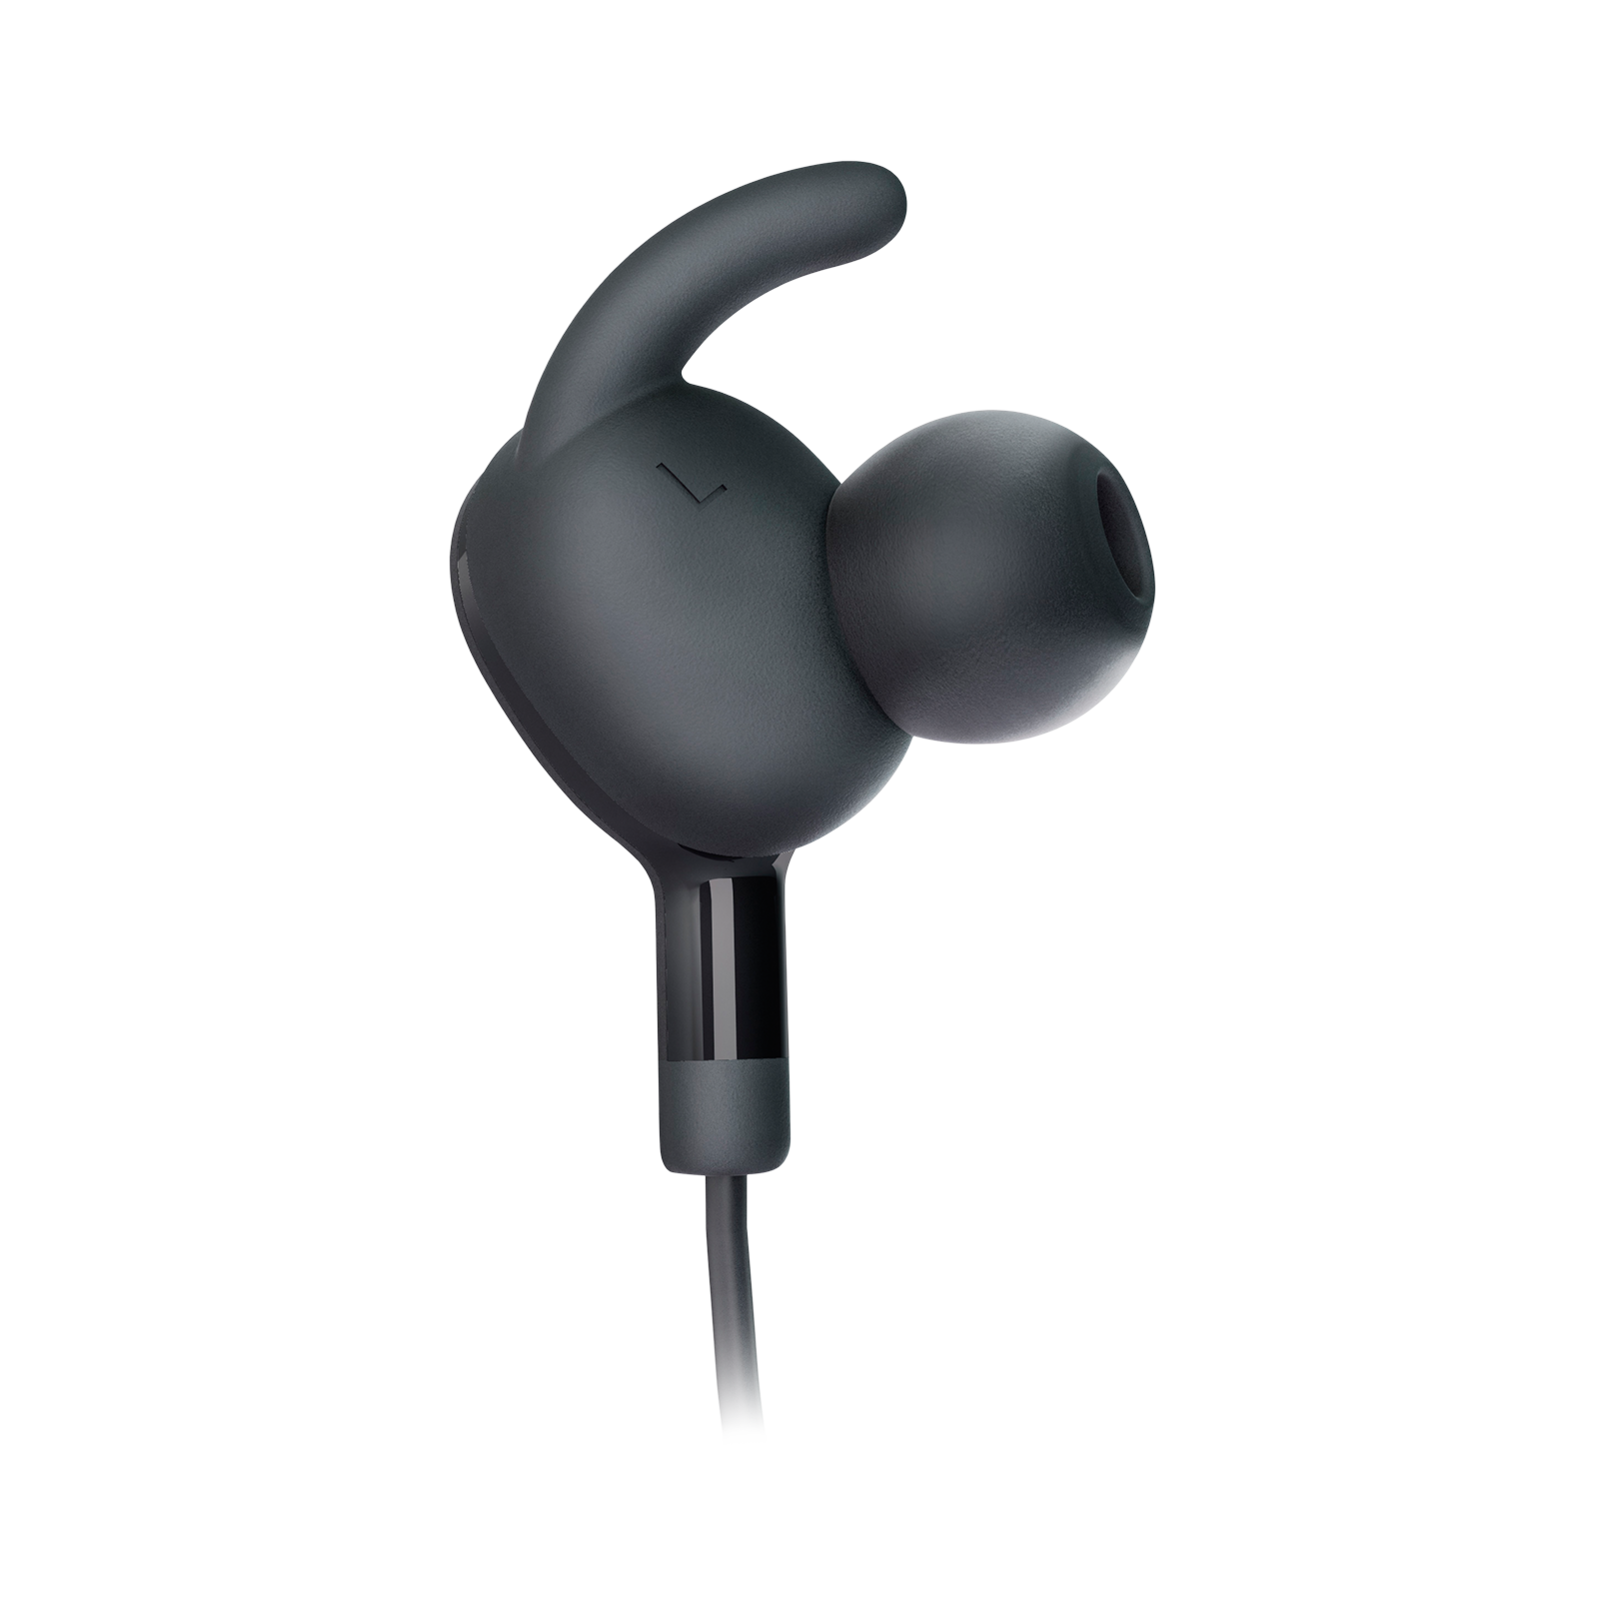 JBL® Everest™ 100 - Black - In-ear Wireless Headphones - Detailshot 6